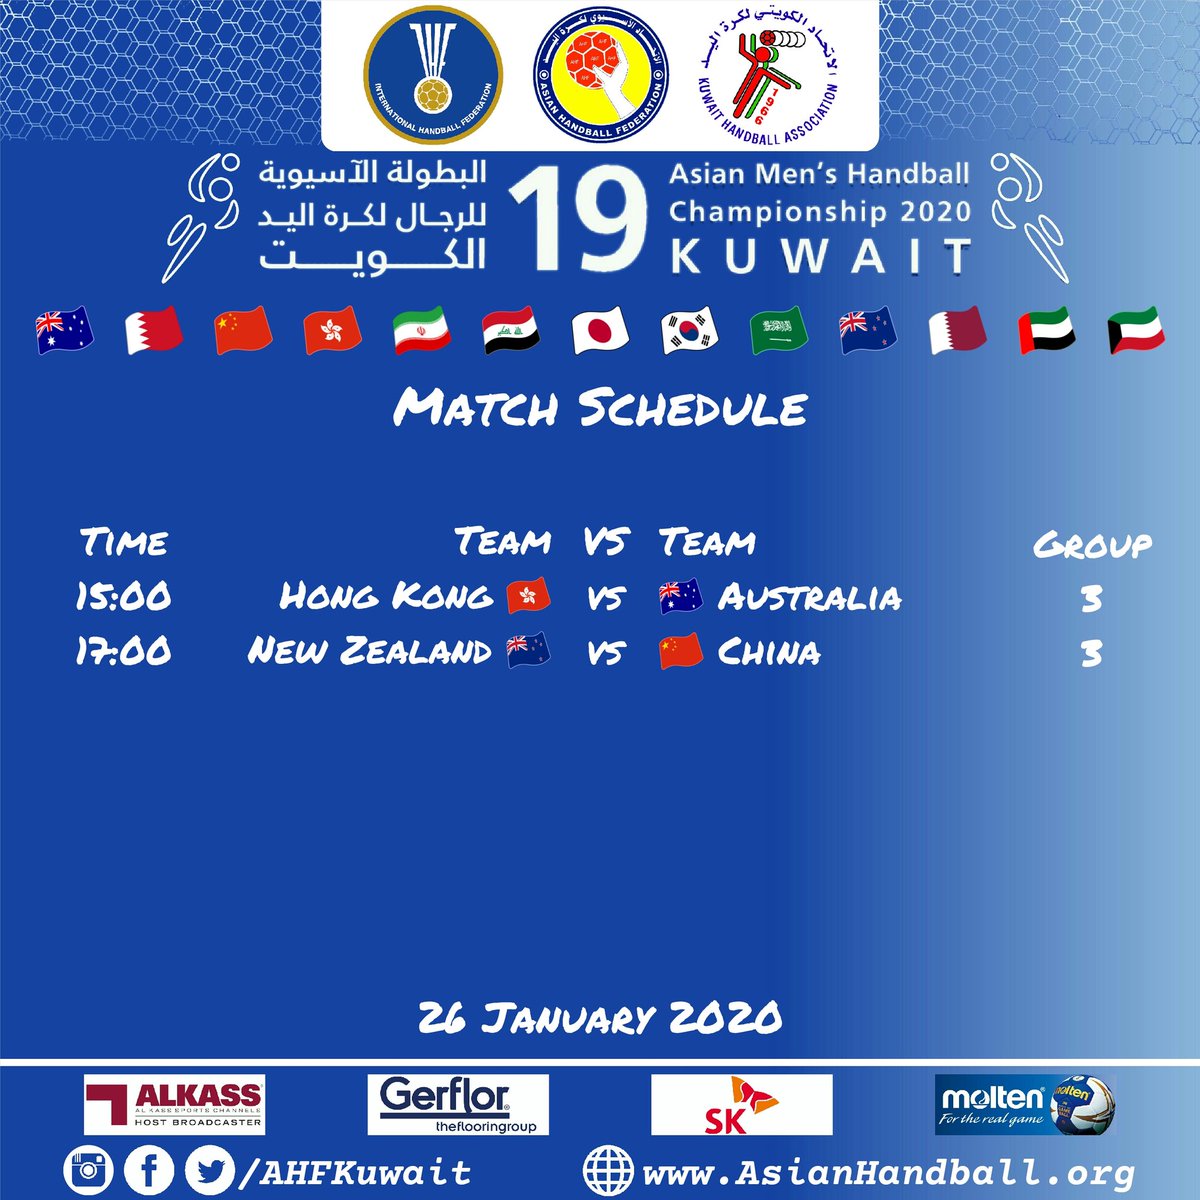 Match schedule | 26 January | 19th Asian Men's Handball Championship | Kuwait 2020 🇰🇼 #AsianHandball2020 #Kuwait2020 #AHFKuwait